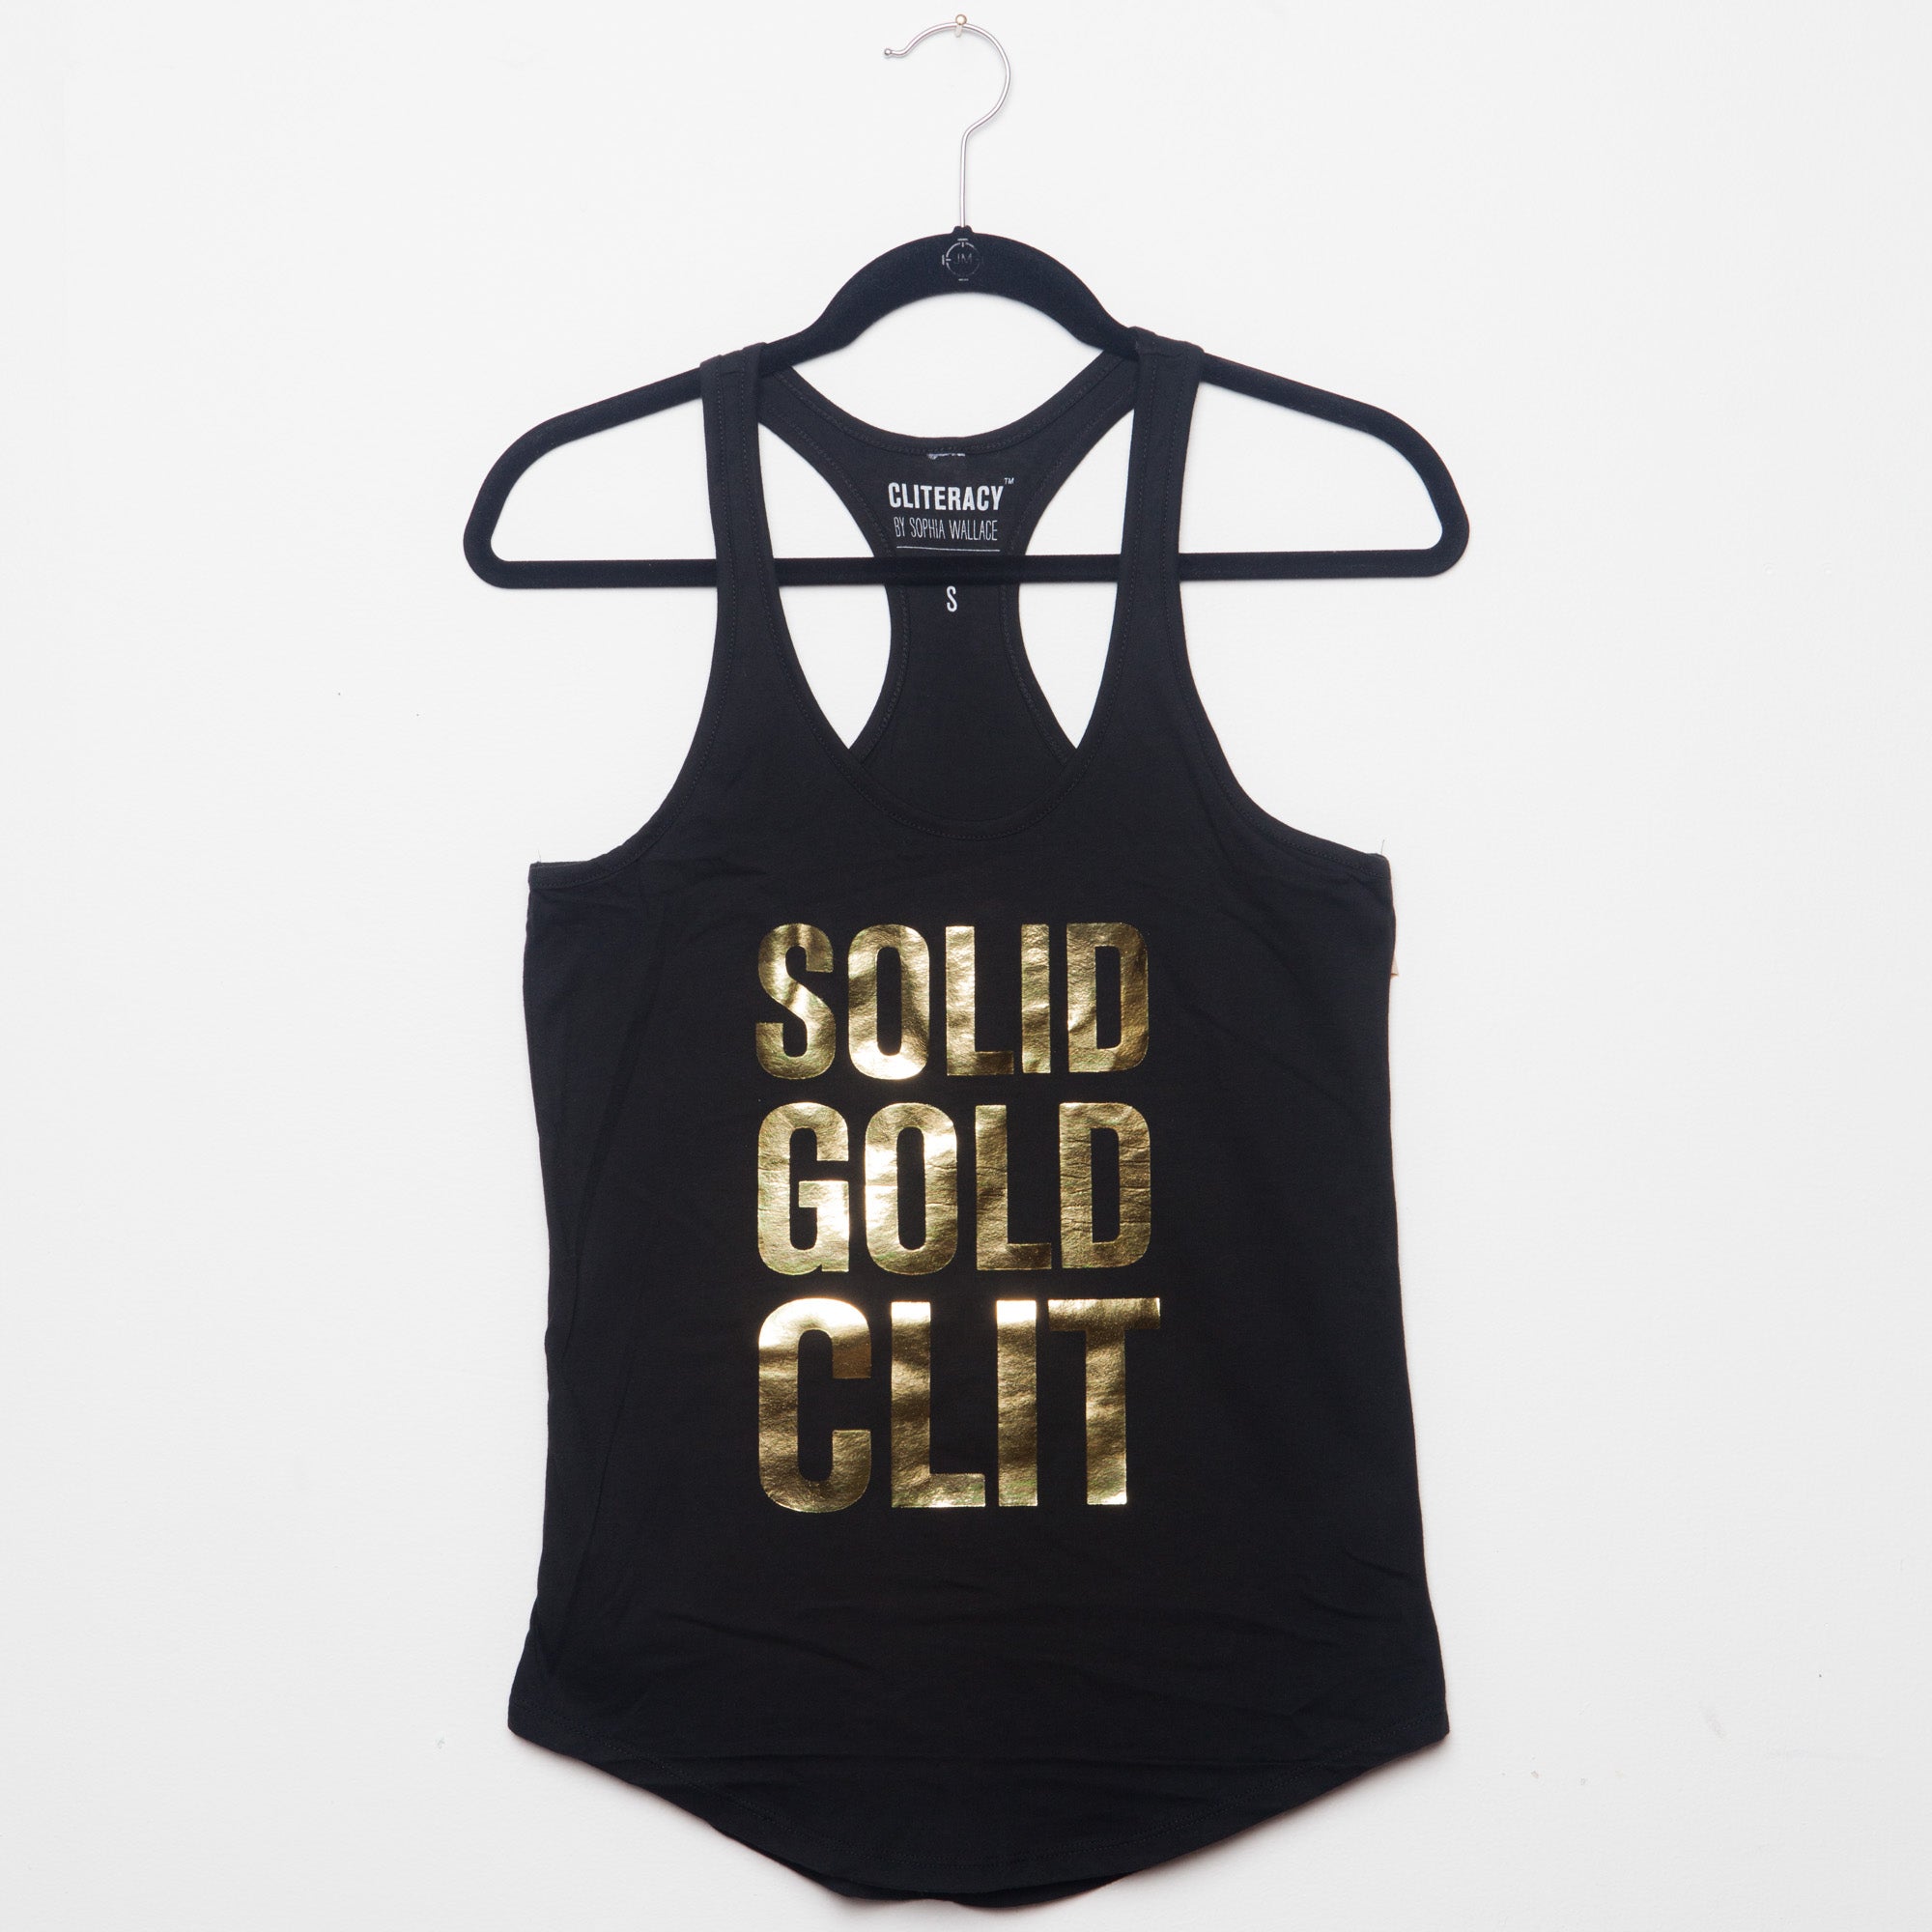 SOLID GOLD CLIT | Cotton Racerback Tank